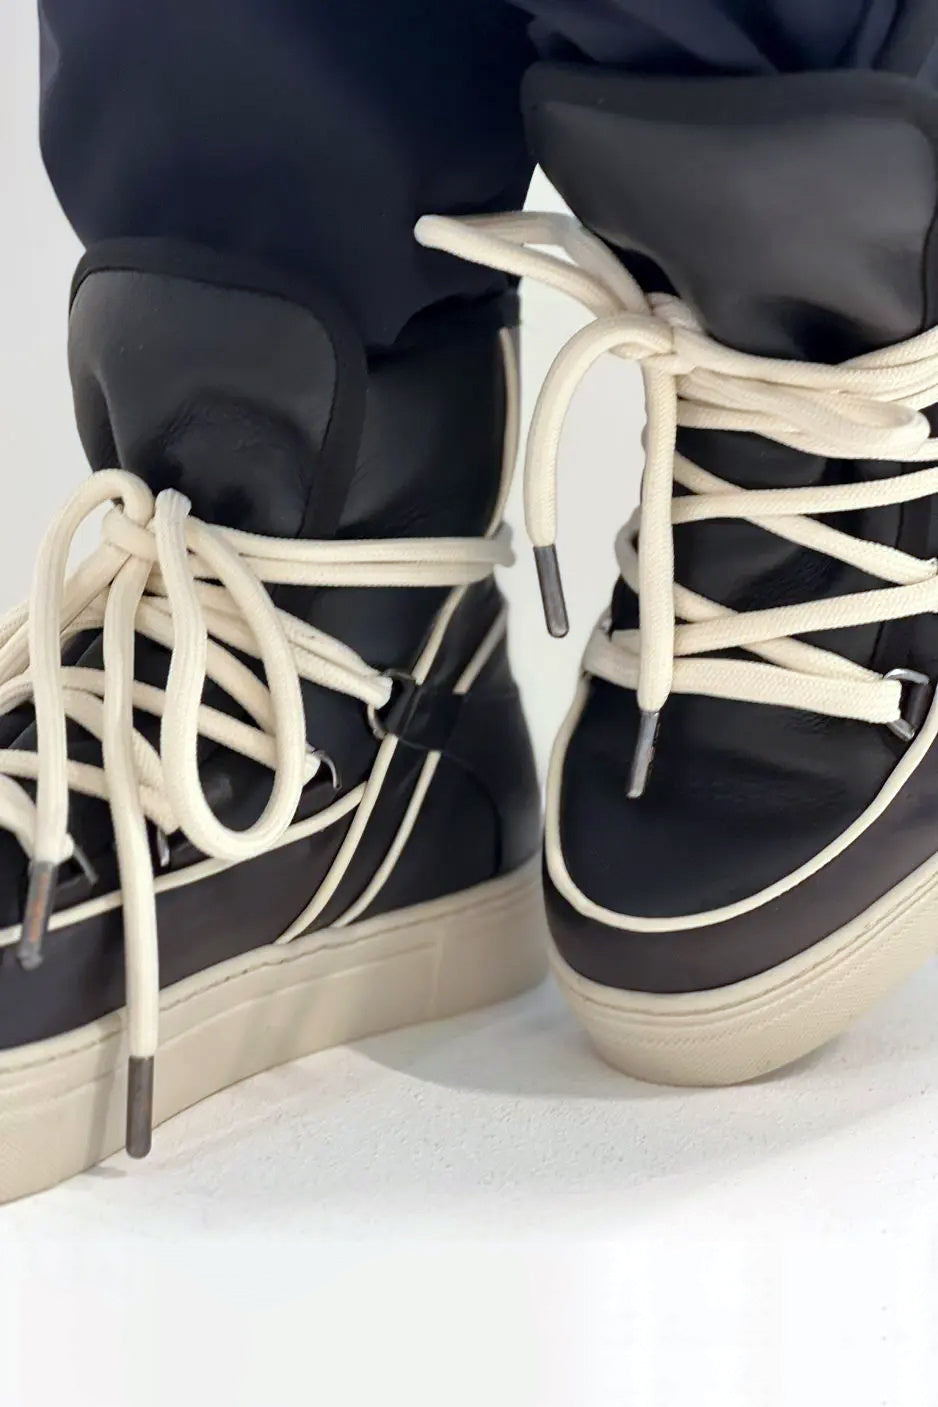 Est'Seven Mouton Sneaker Napa - Black/White Trim - RUM Amsterdam